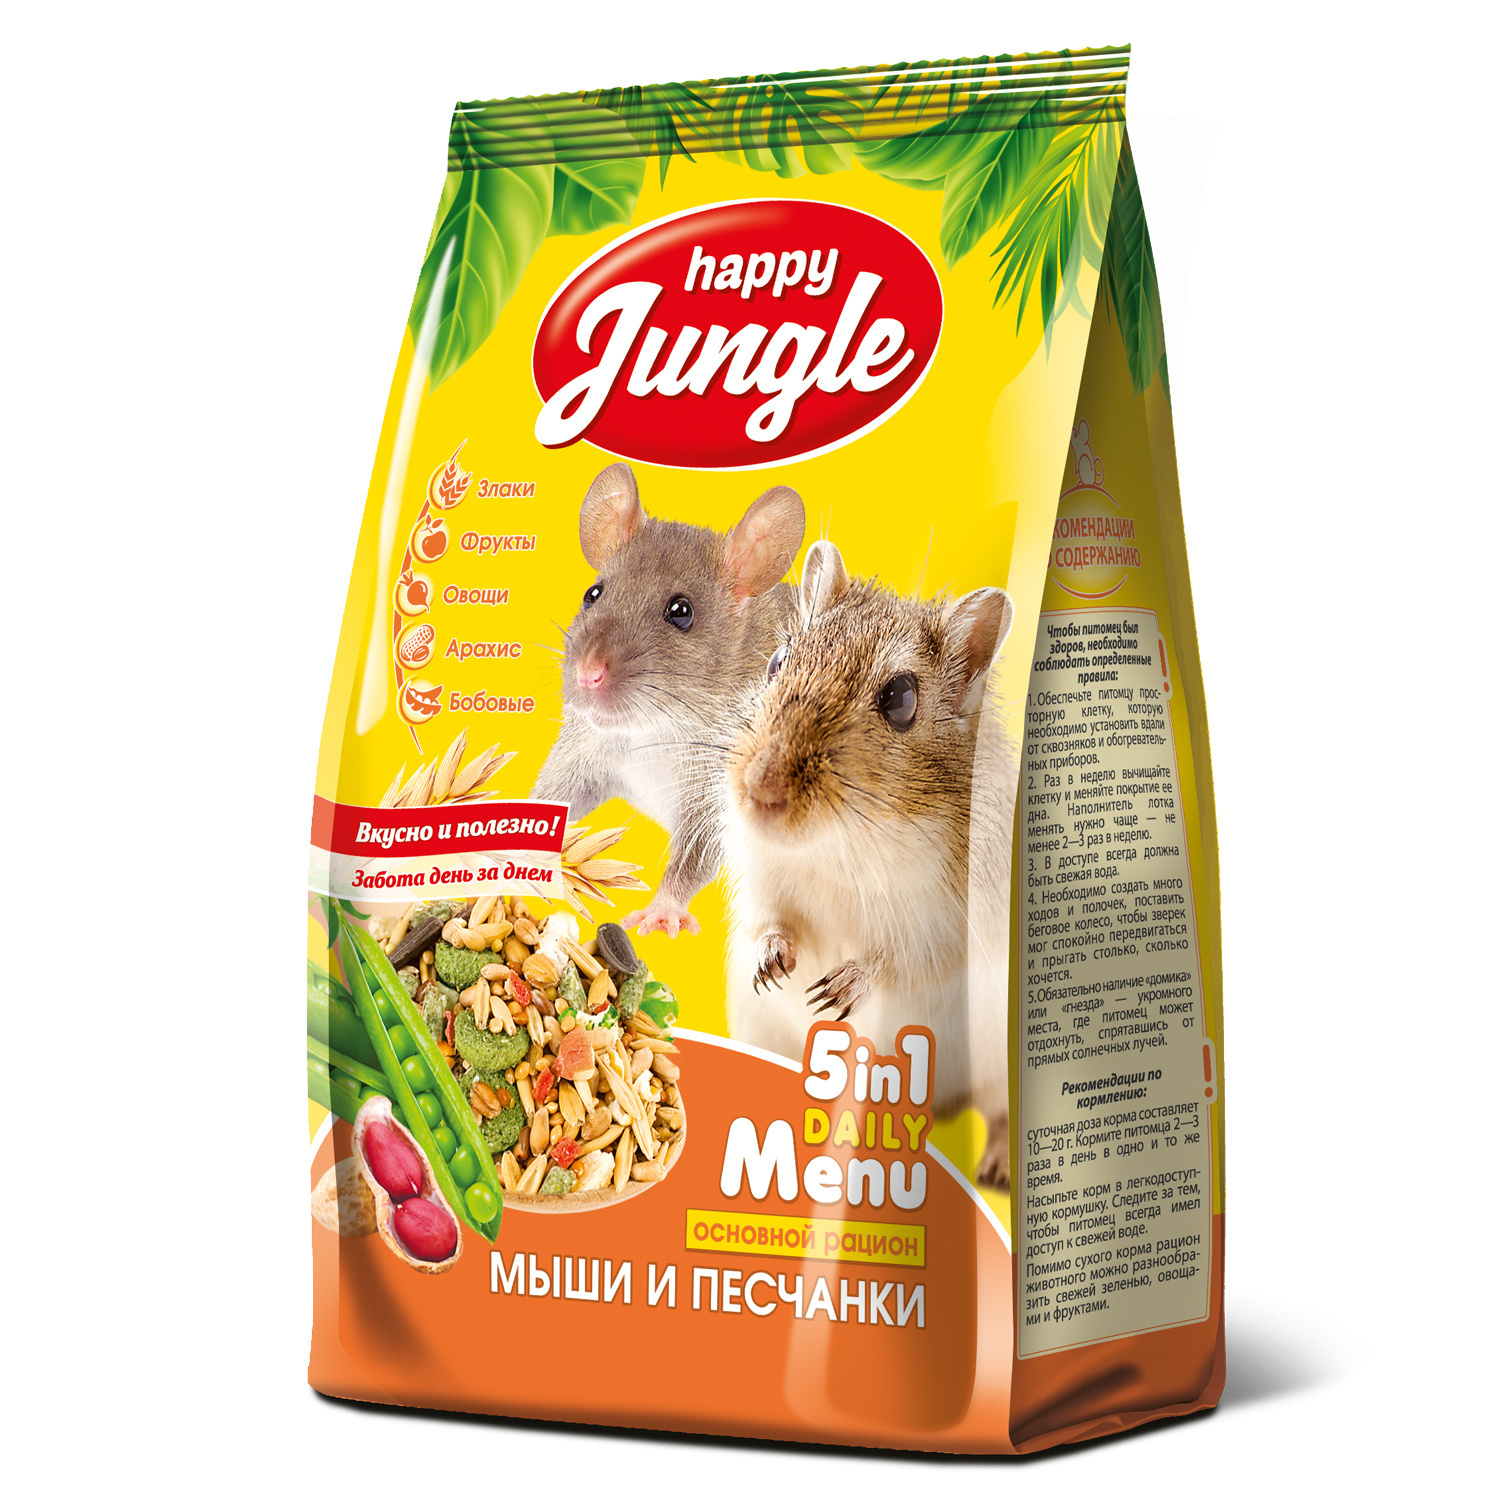 Happy Jungle Happy Jungle корм для мышей и песчанок 400 г (400 г) корм для грызунов happy jungle для мышей и песчанок 400г